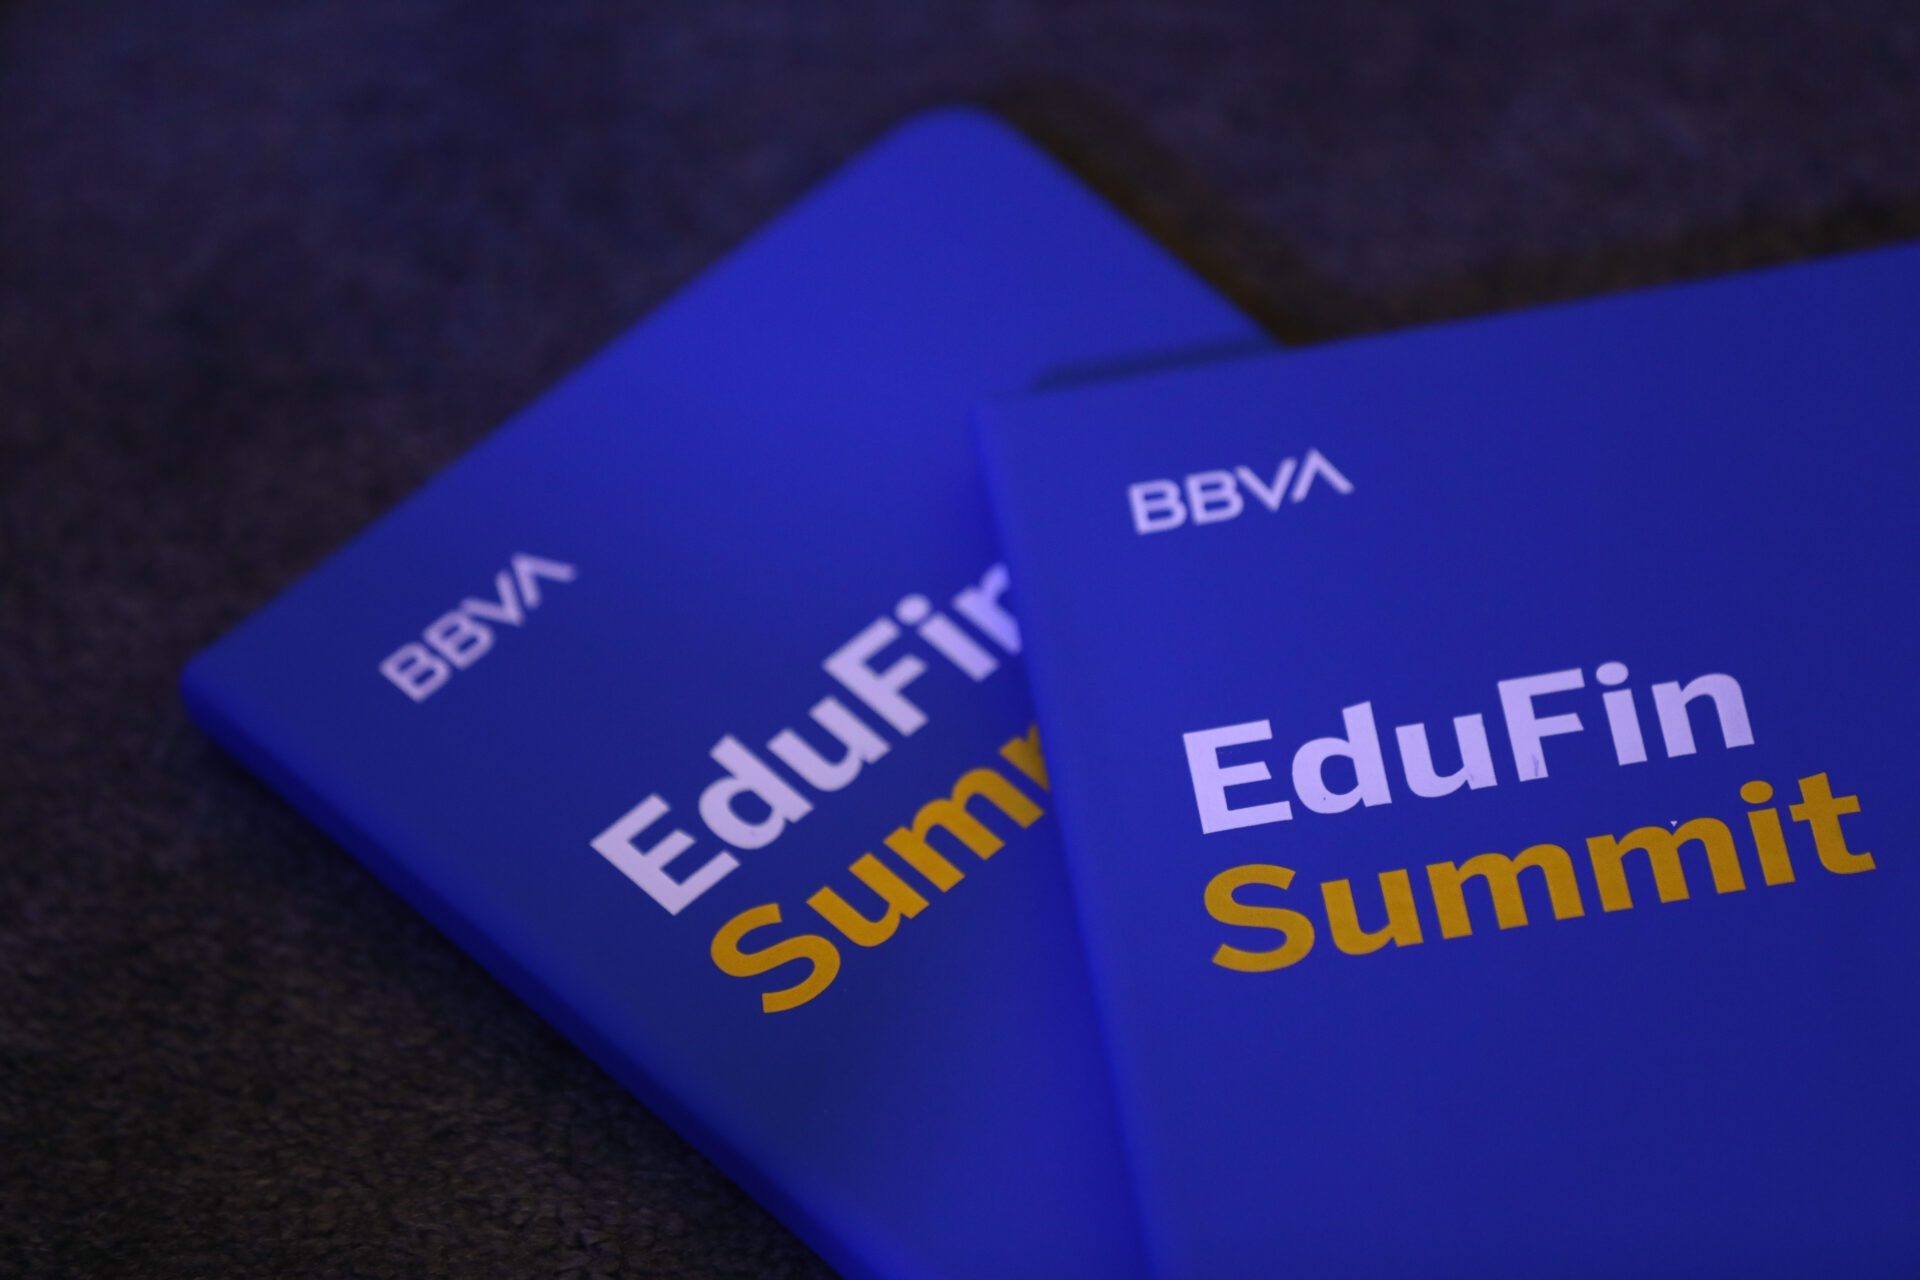 Carlos Torres Vila to open EduFin Summit 2022, BBVA’s global financial education event